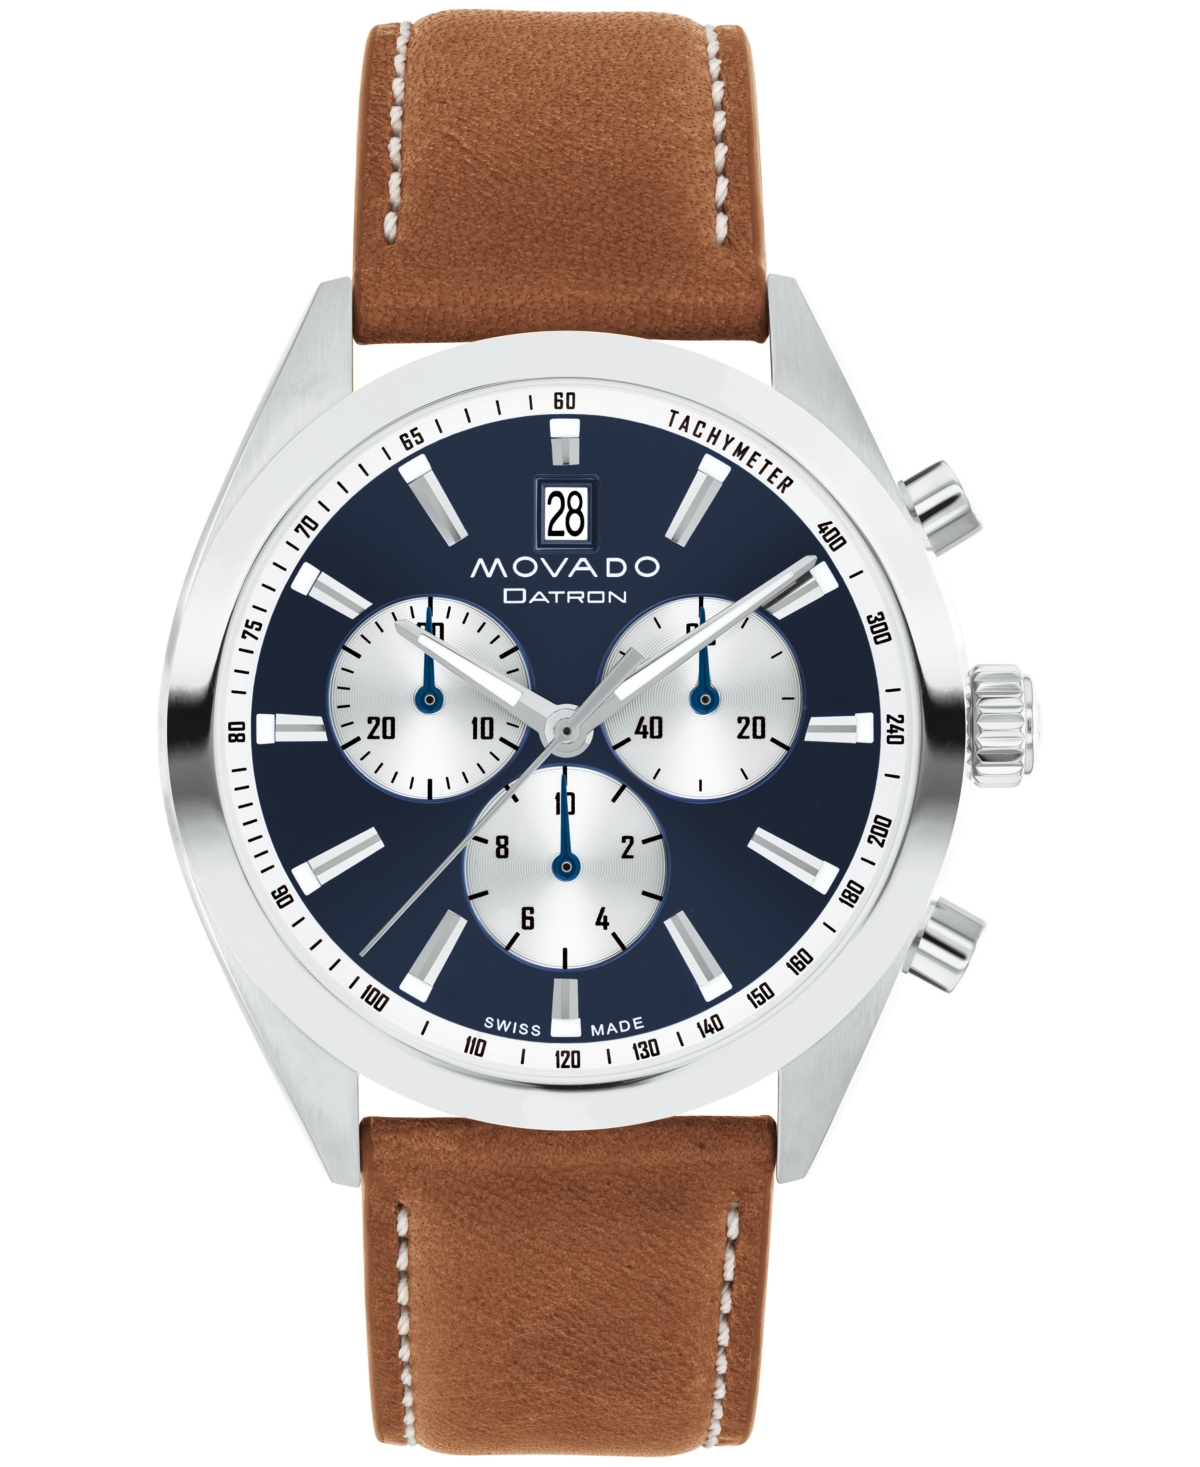 Movado Men's Datron Swiss Quartz Chrono Cognac Leather Watch 40mm